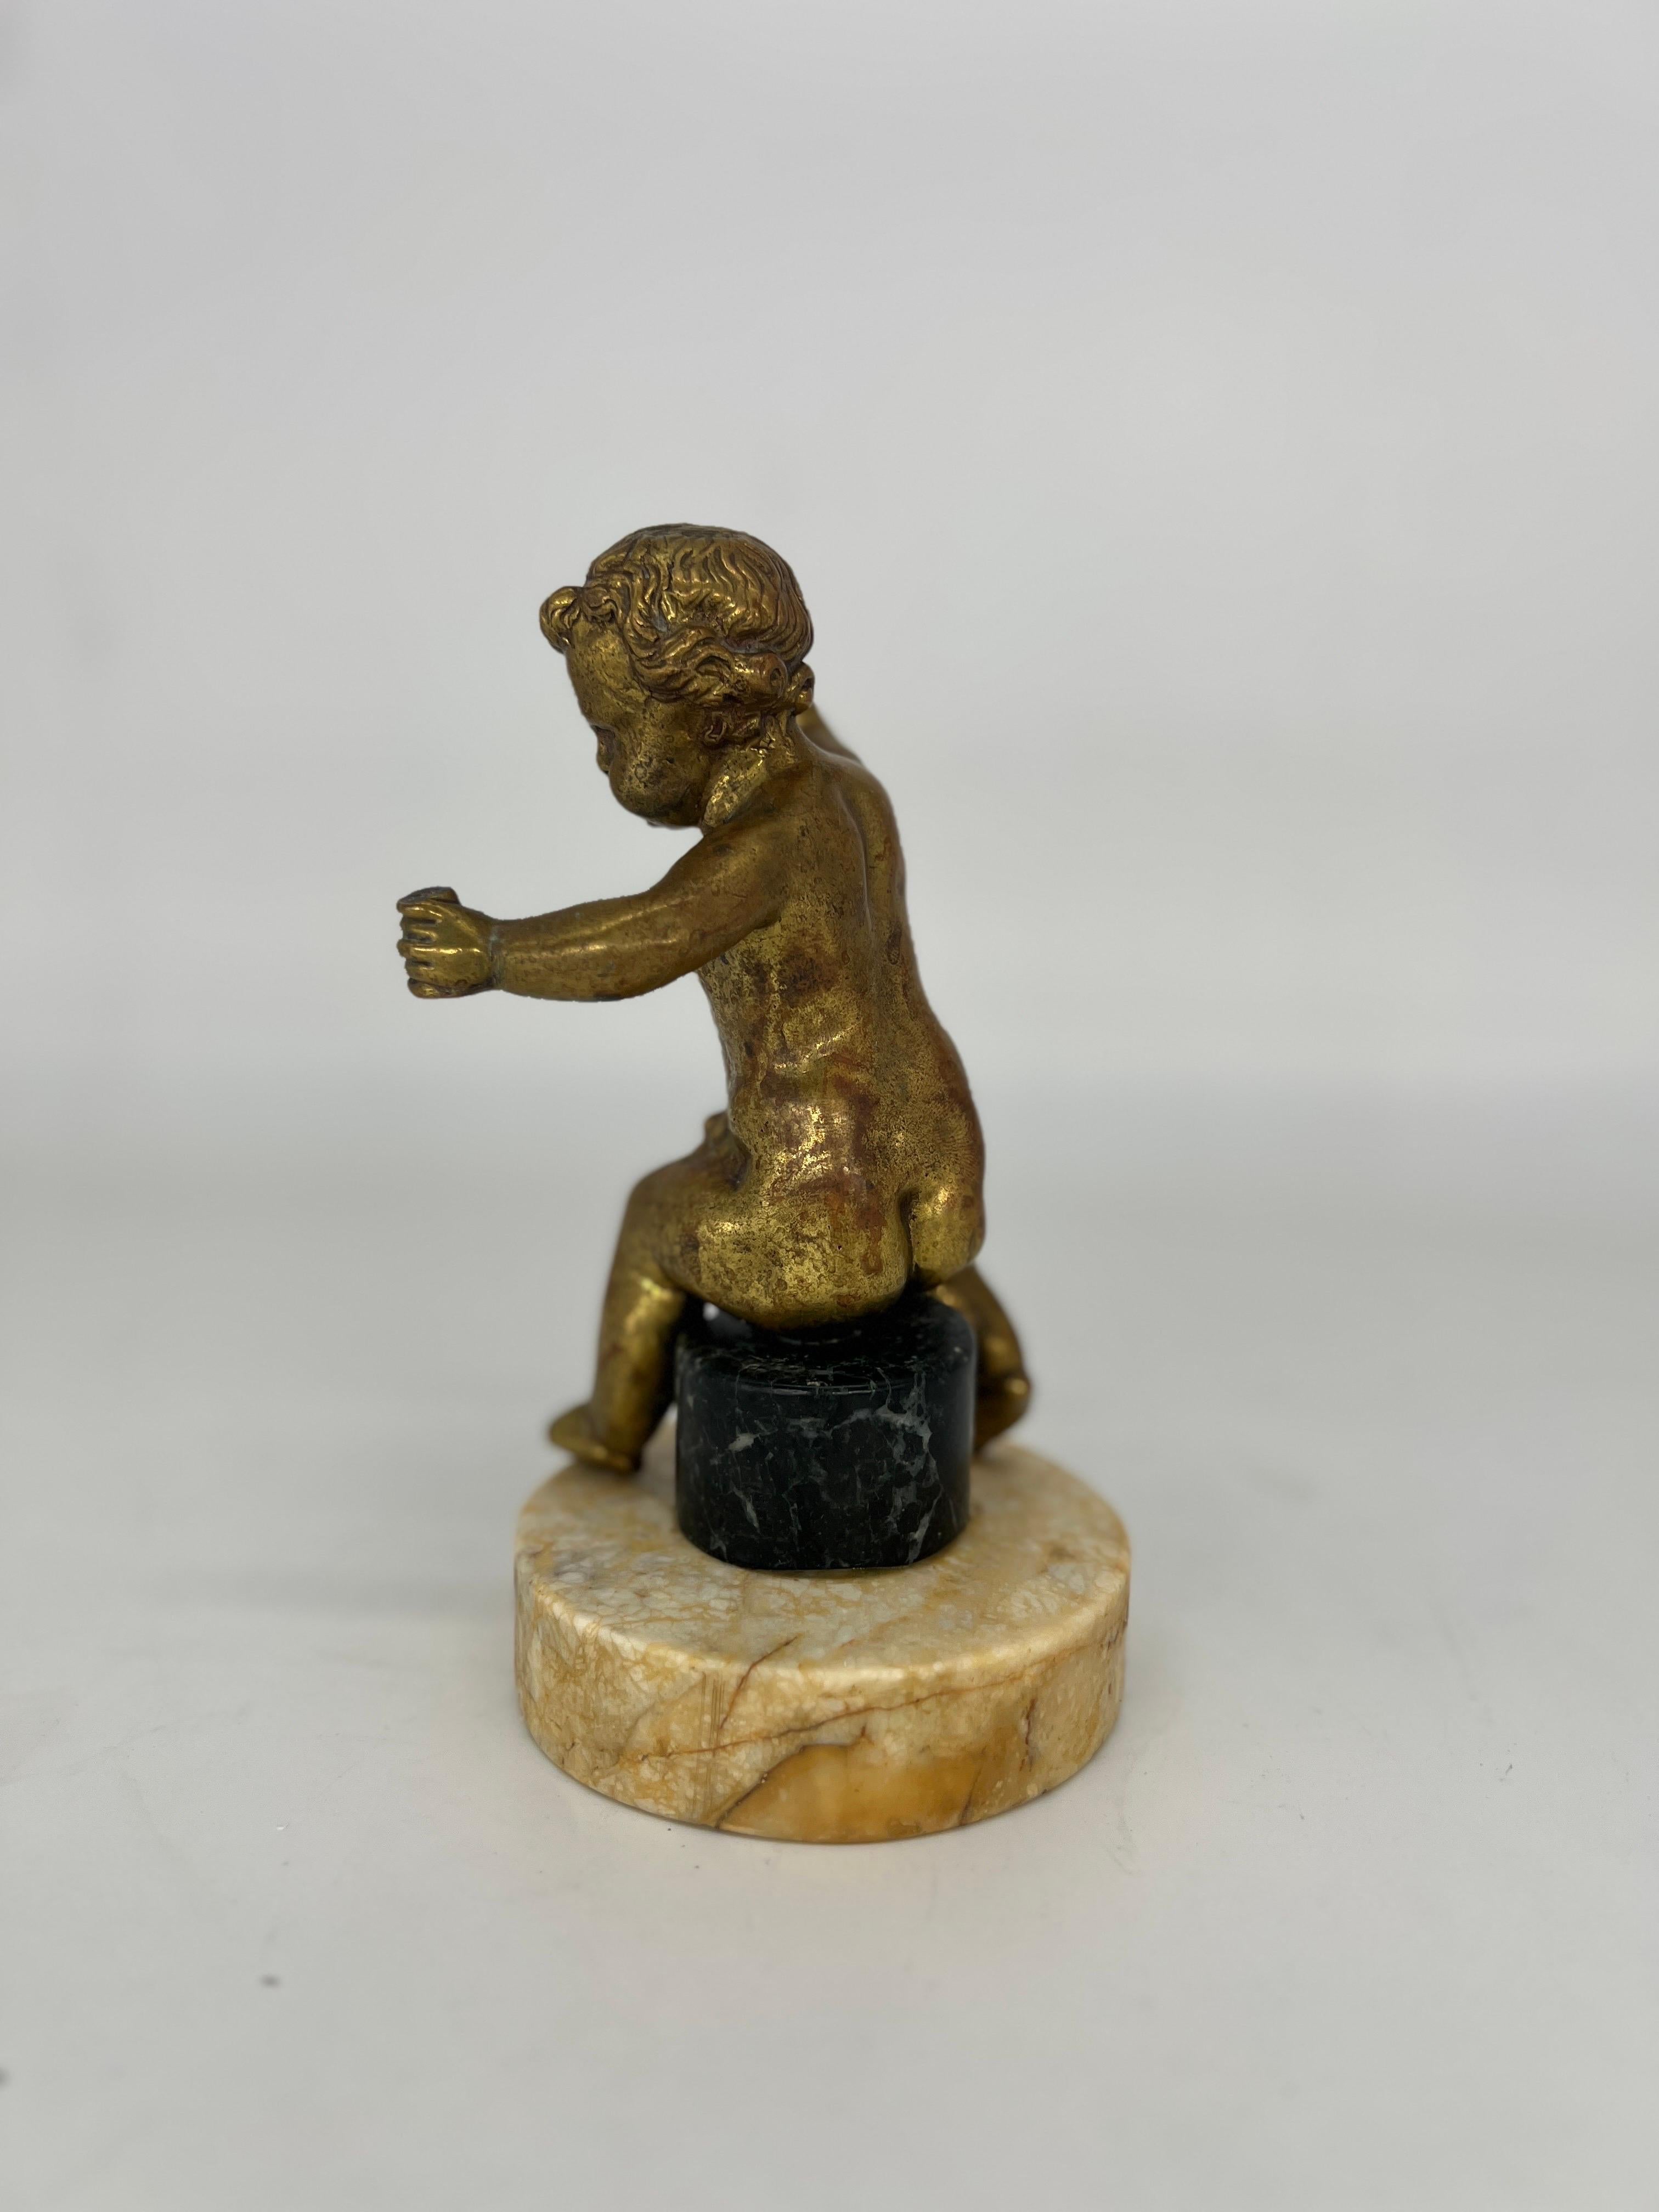 Antique French Gilt Bronze “Grapes into Wine” Cherub Statue Falconet Style For Sale 3